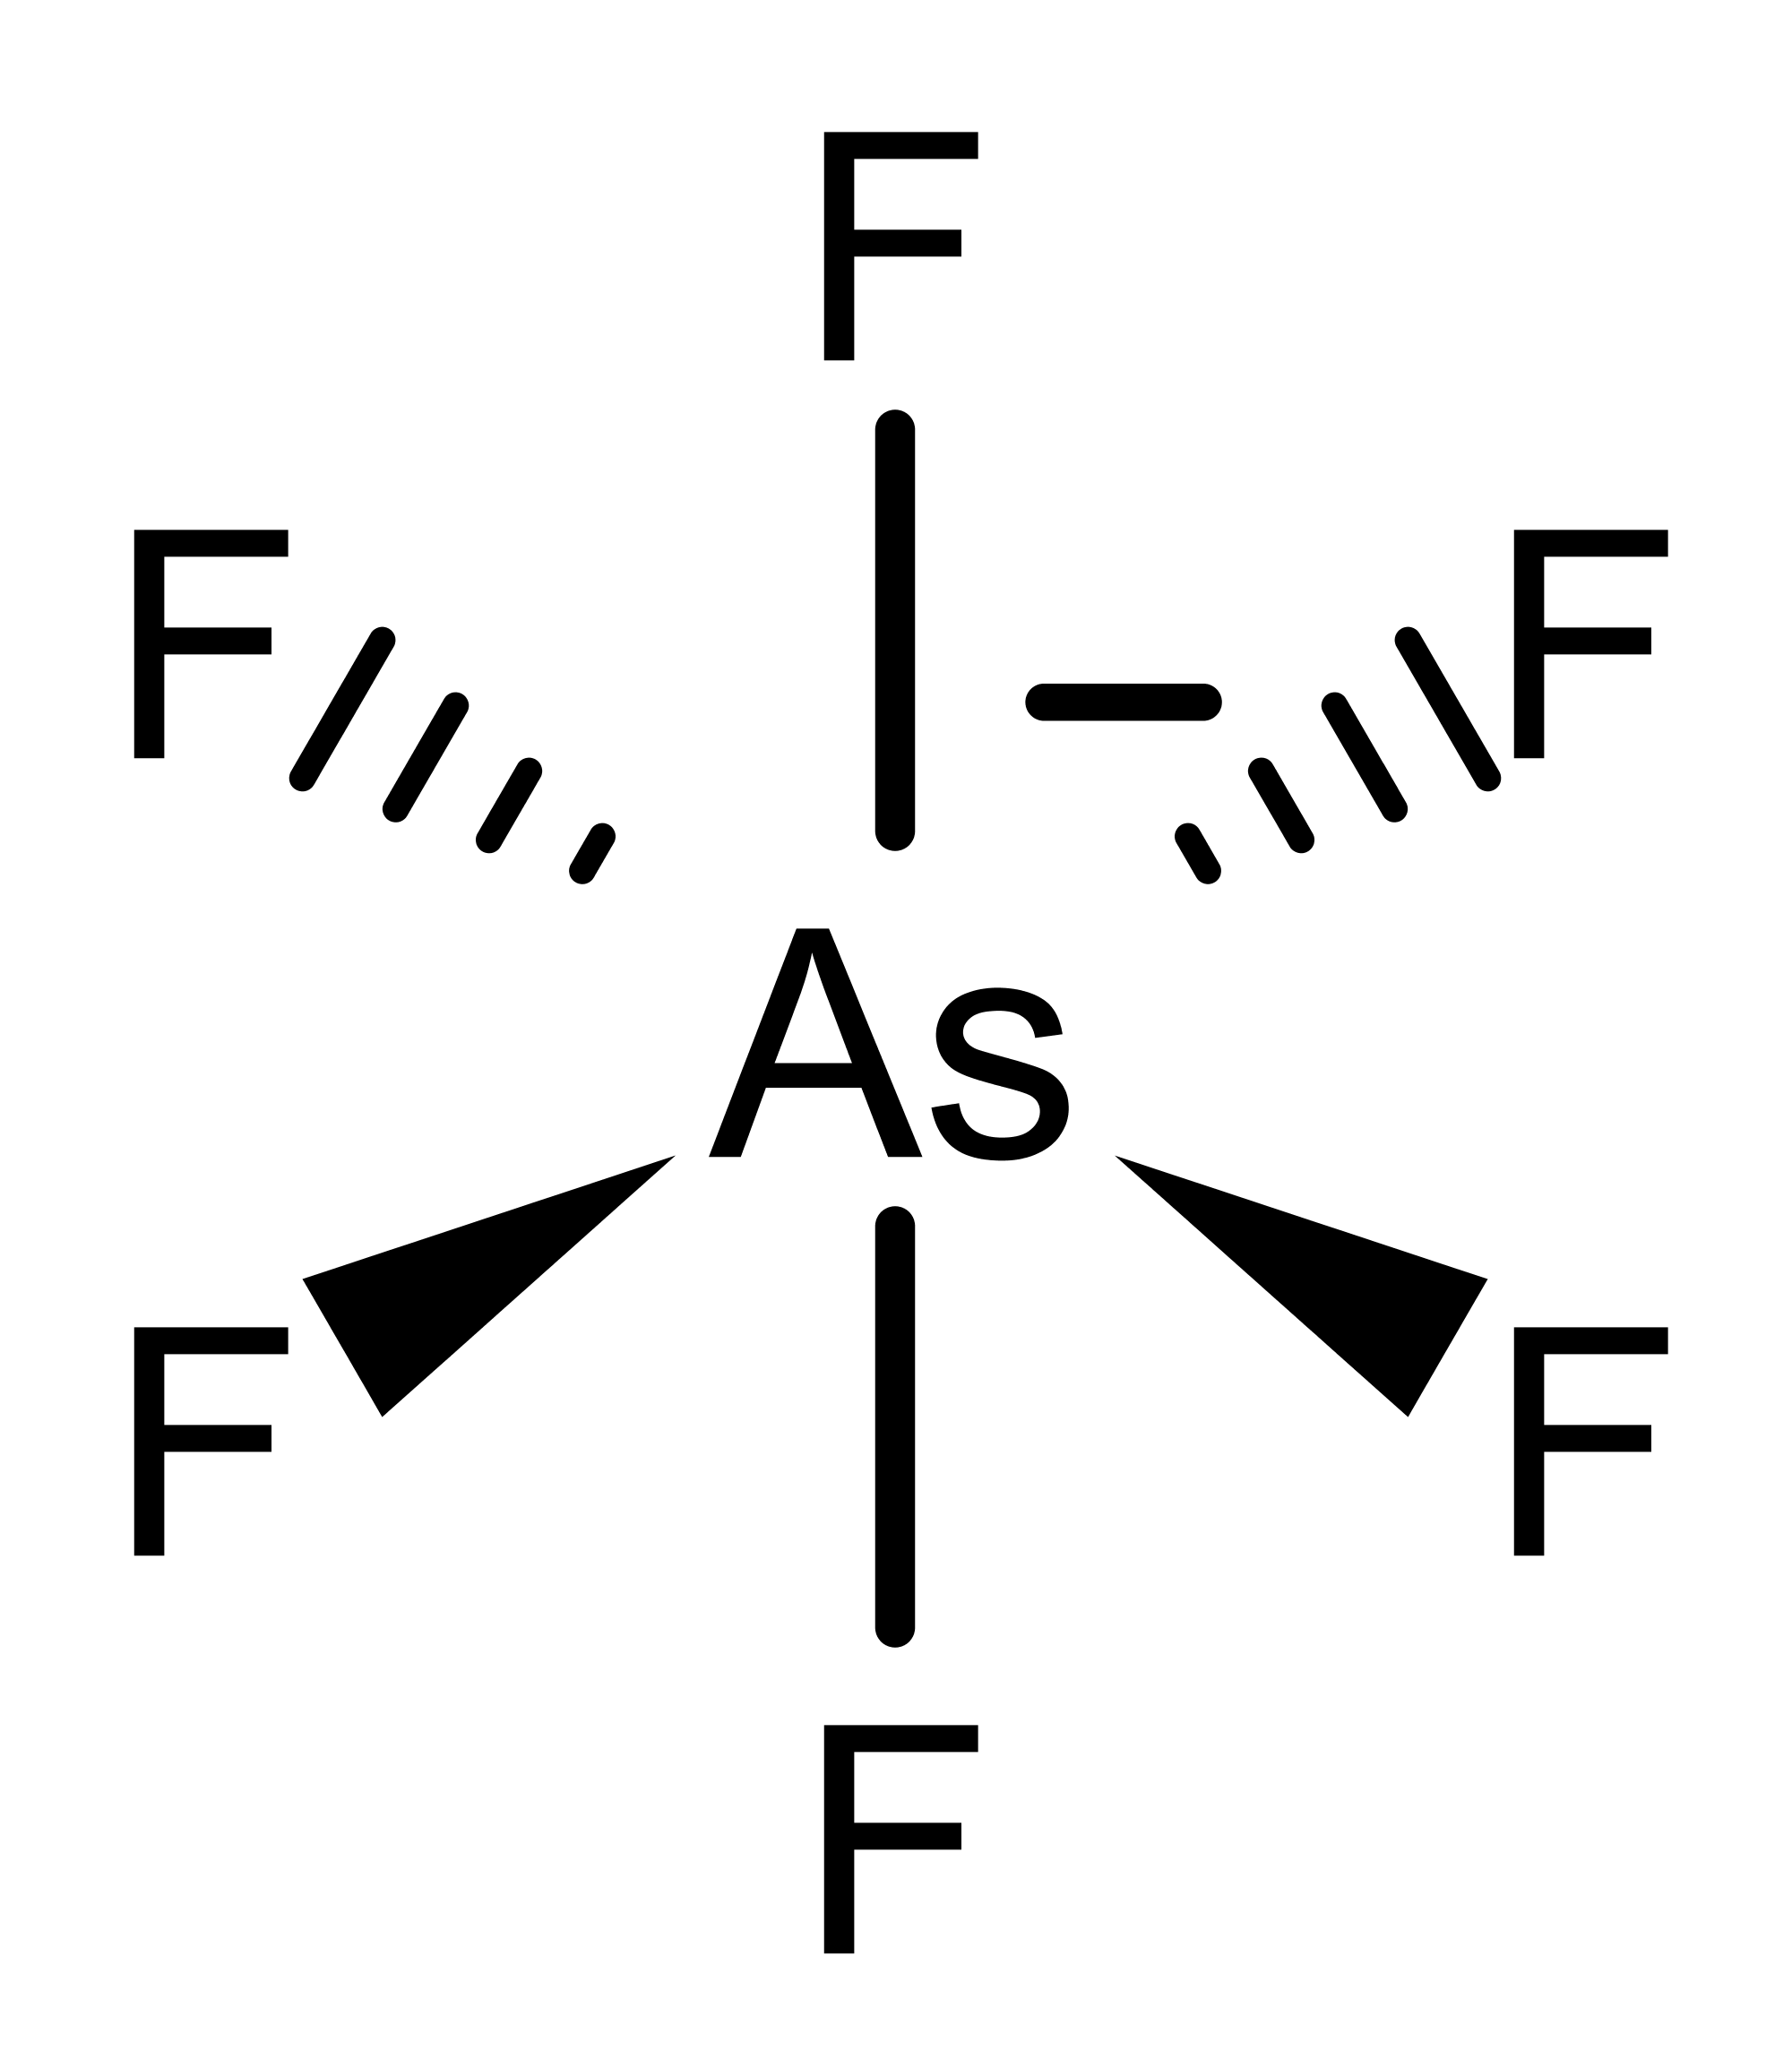 [AsF6]-Hexafluoroarsenate(V)+ion-2890